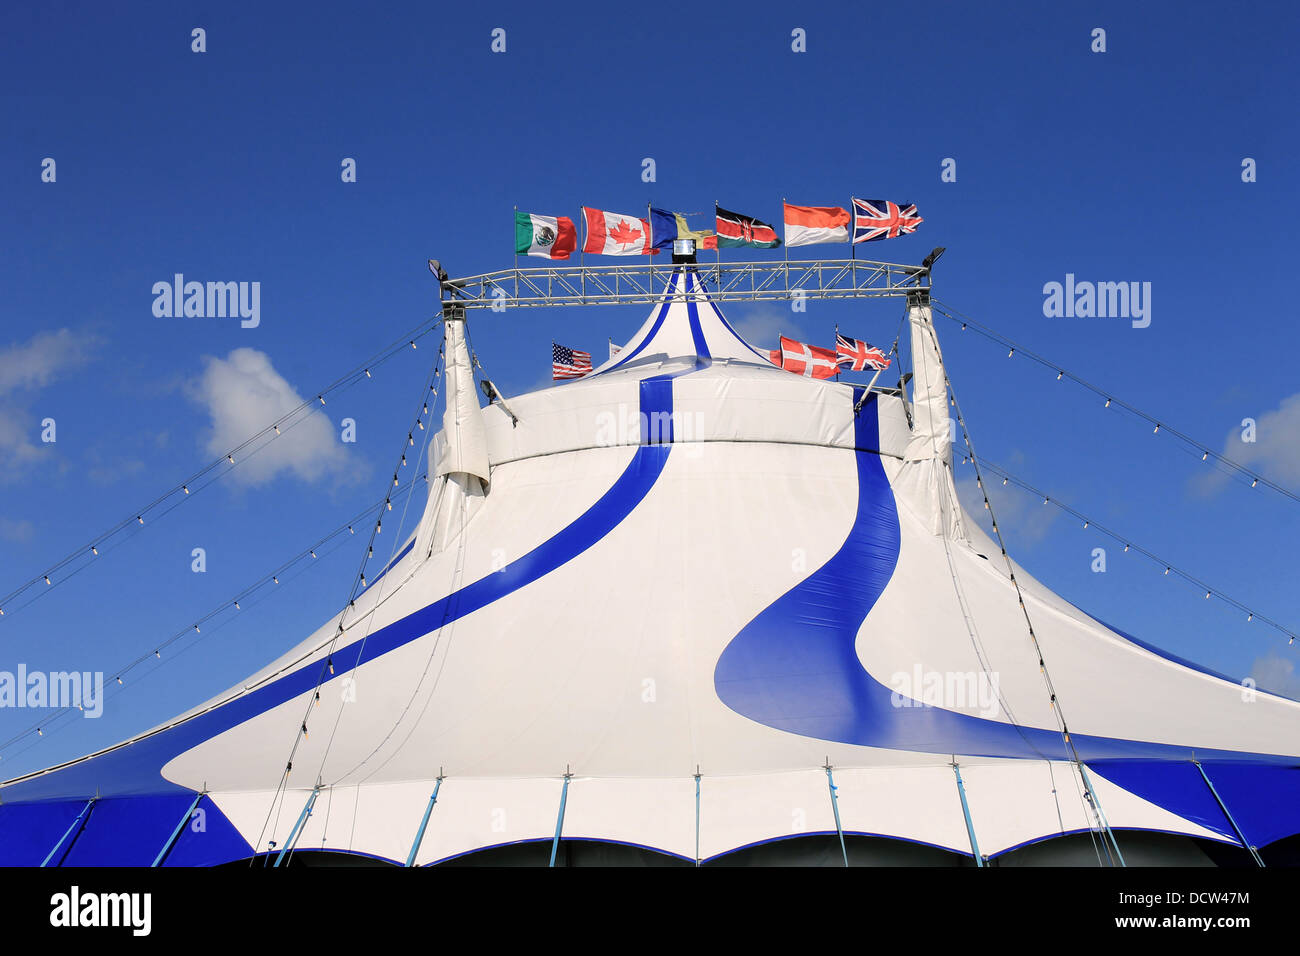 L'extérieur de la tente du cirque big top, bleu et blanc. Banque D'Images